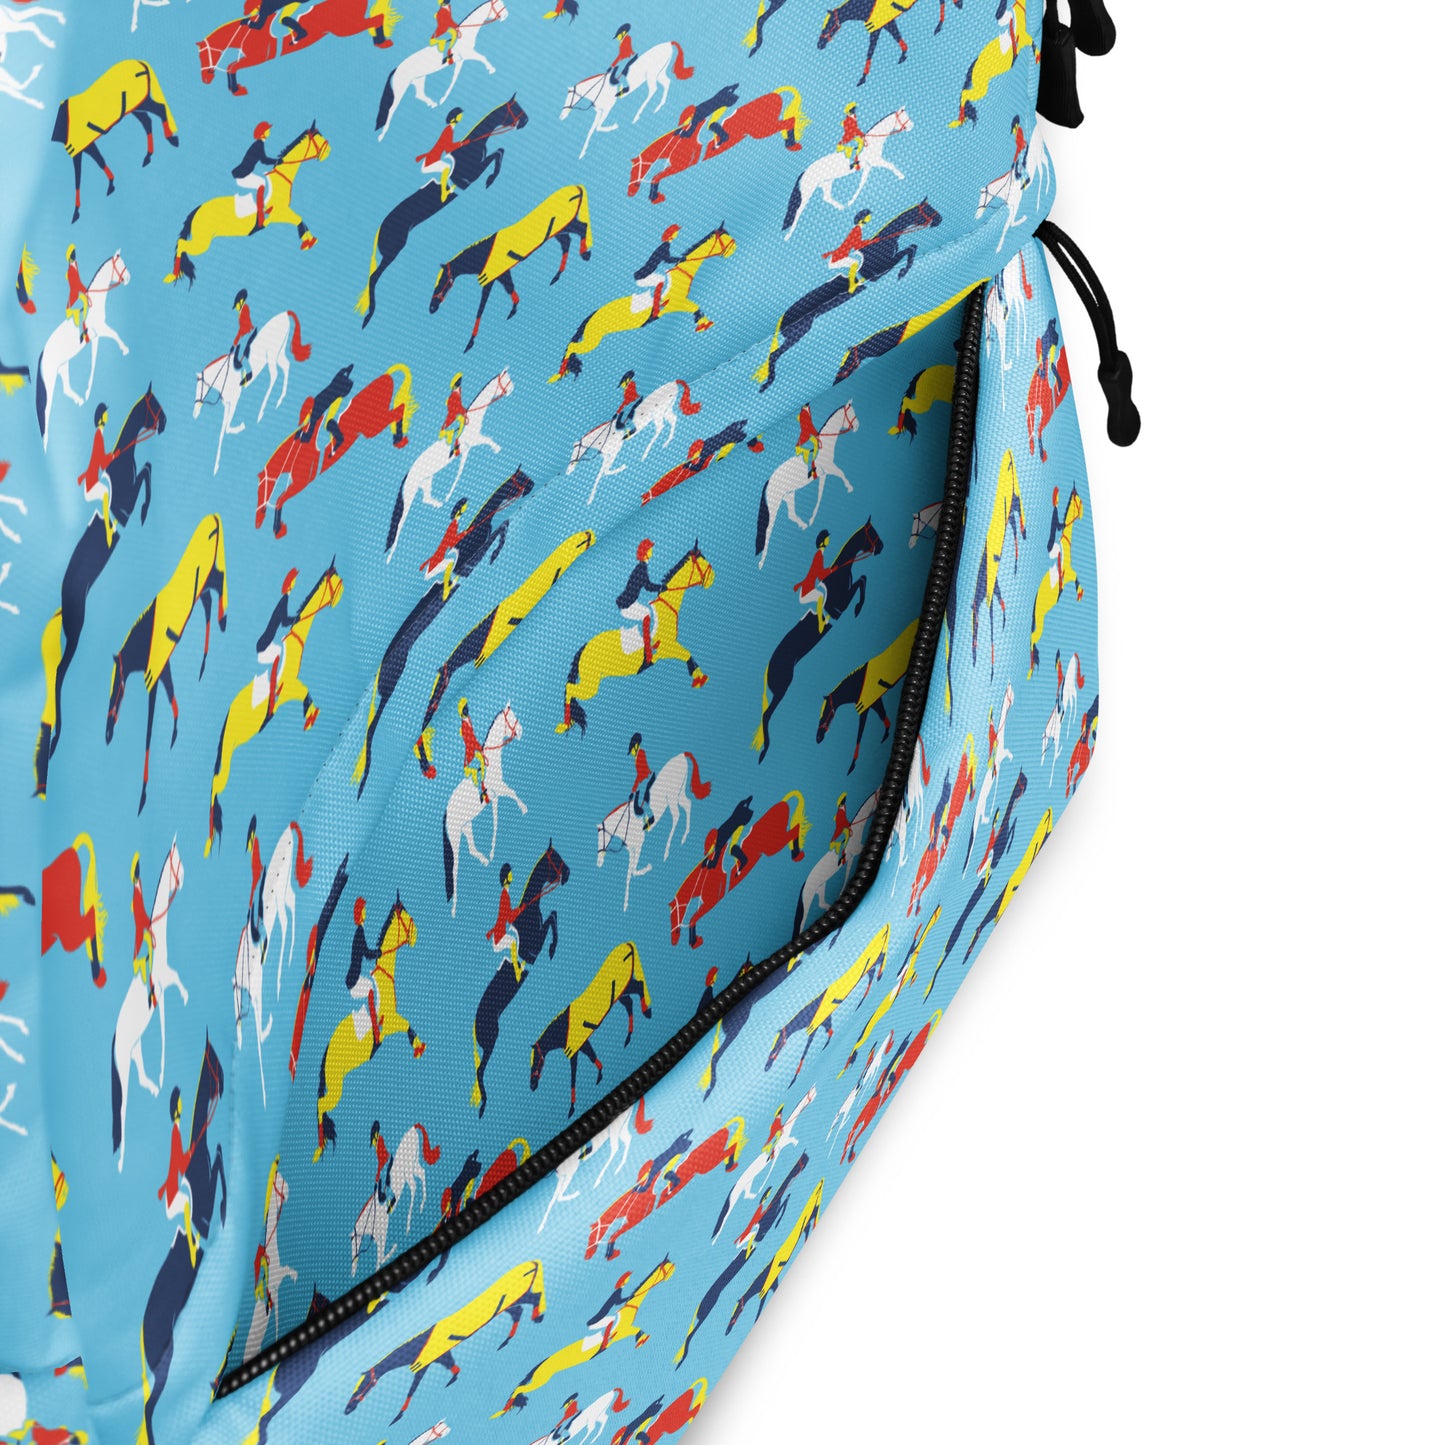 Hunter Jumper Primary Colors Backpack